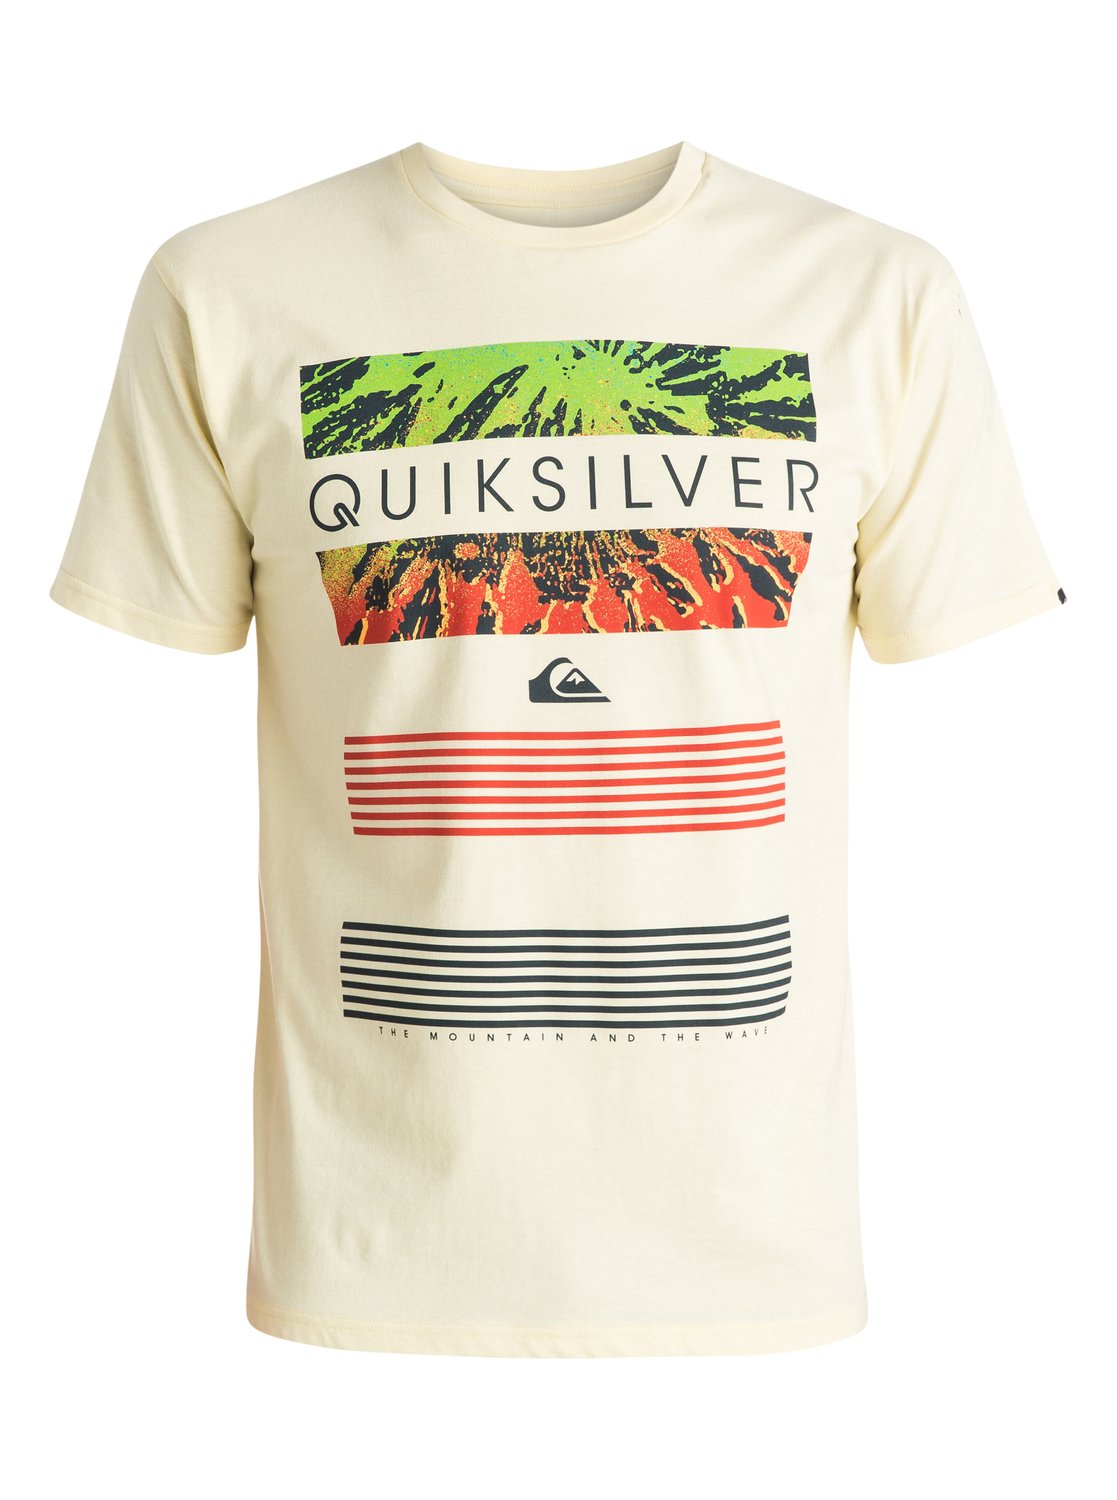 Classic Line Up - T-Shirt - Quiksilver<br>